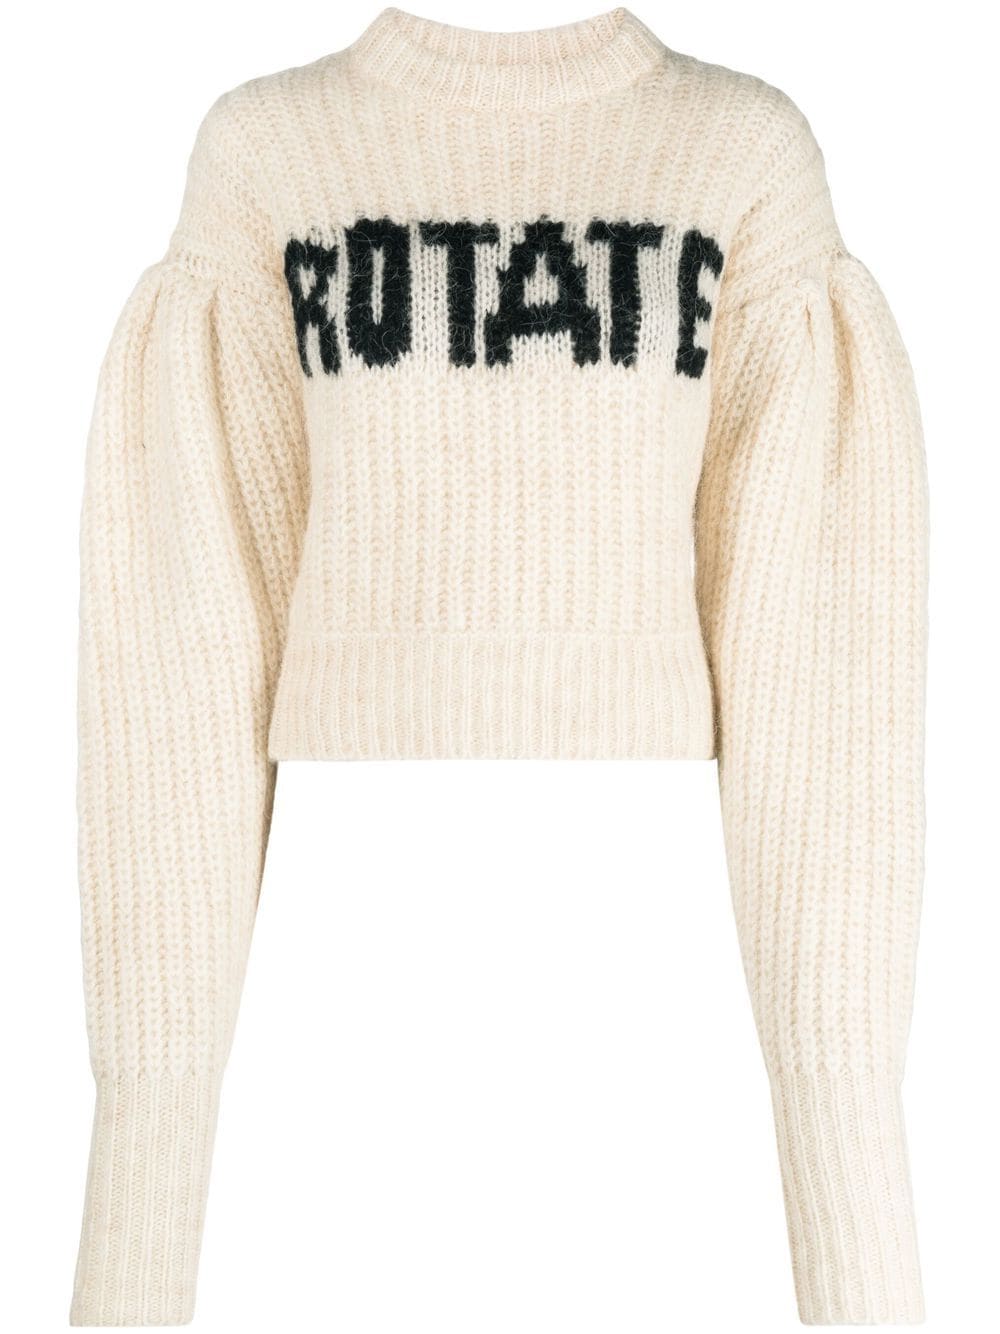 ROTATE intarsia-logo cropped jumper - White